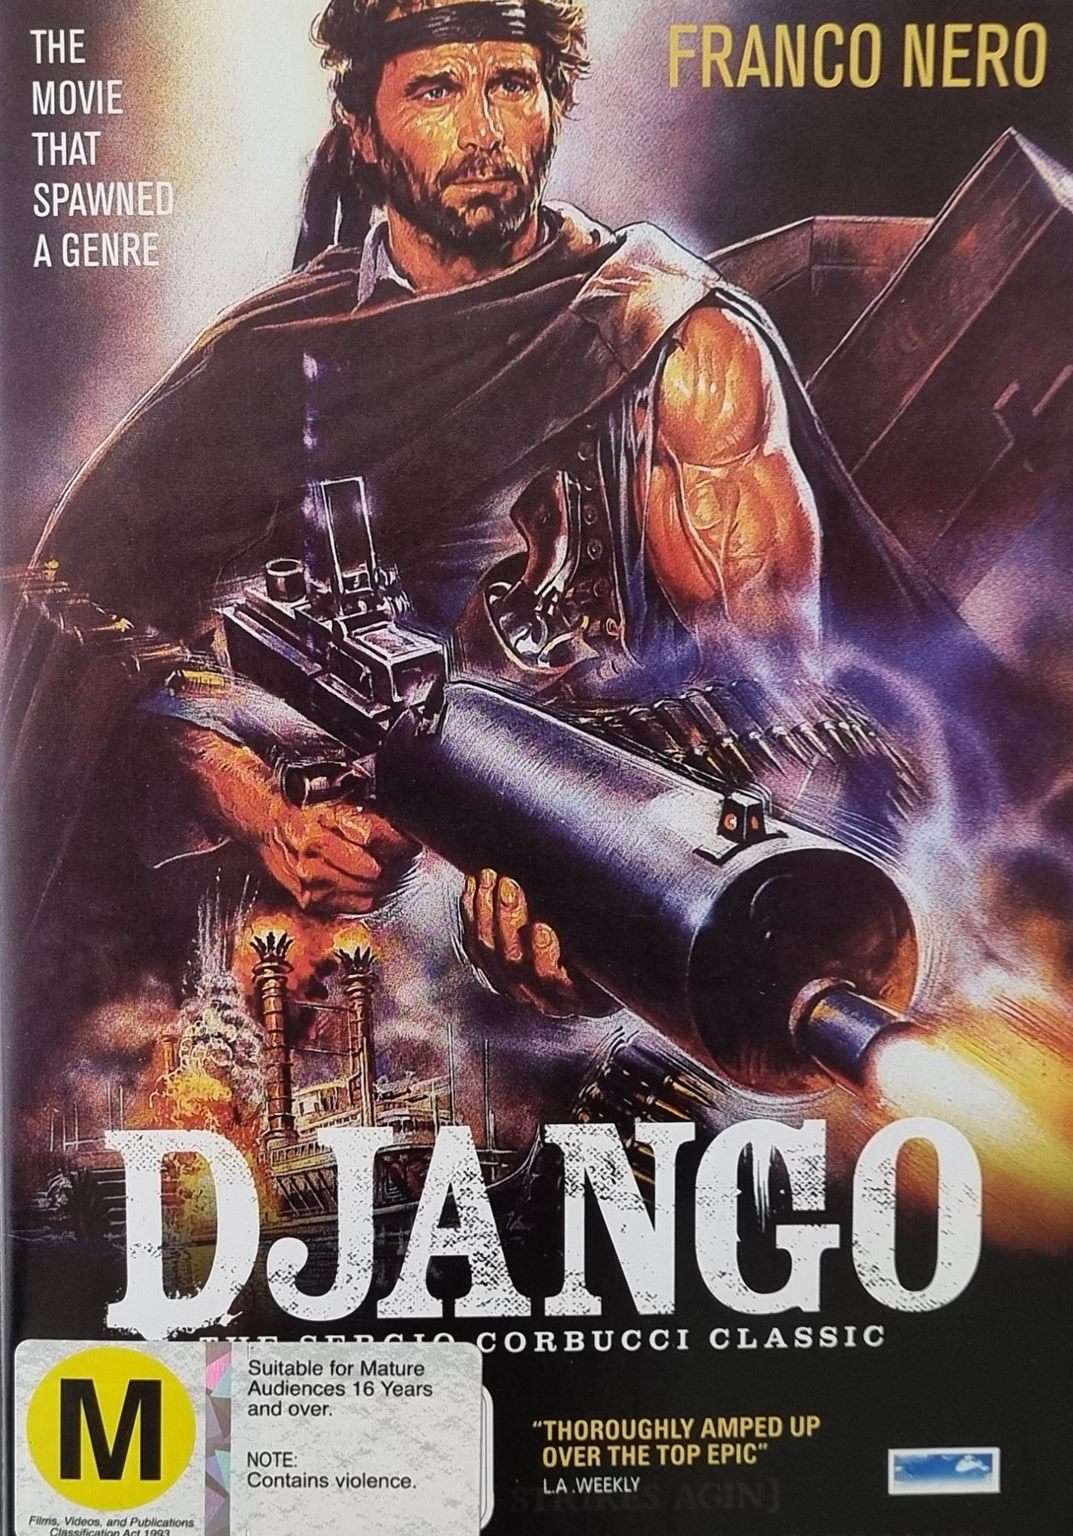 Django Franco Nero